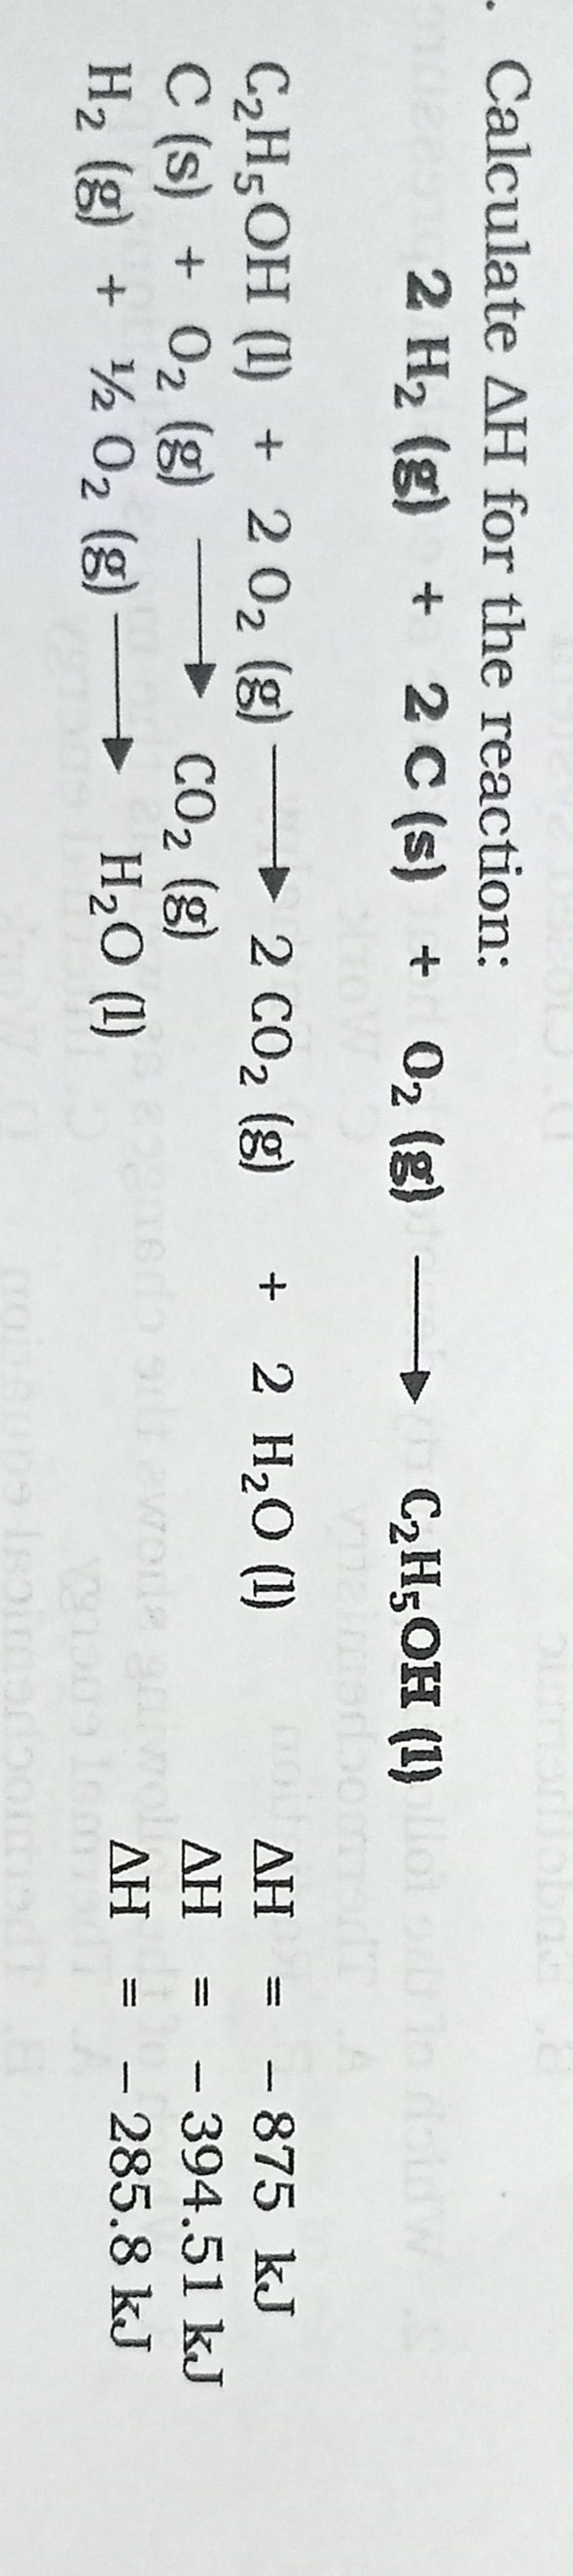 - Calculate AH for the reaction:
2 H2 (g) + 2 C (s) + 02 (g)
C2H5OH (1)ol
foldw
2 H20 (1)
C2H5OH (1) + 2 02 (g)
C (s) + 02 (g)
H2 (g) + ½ 02 (g) –
2 CO2 (g)
CO2 (g)
H2O (1)
ΔΗ
-875KJ
%3D
AH
-394.51 kJ
ΔΗ
- 285.8 kJ
%3D
9 ls
